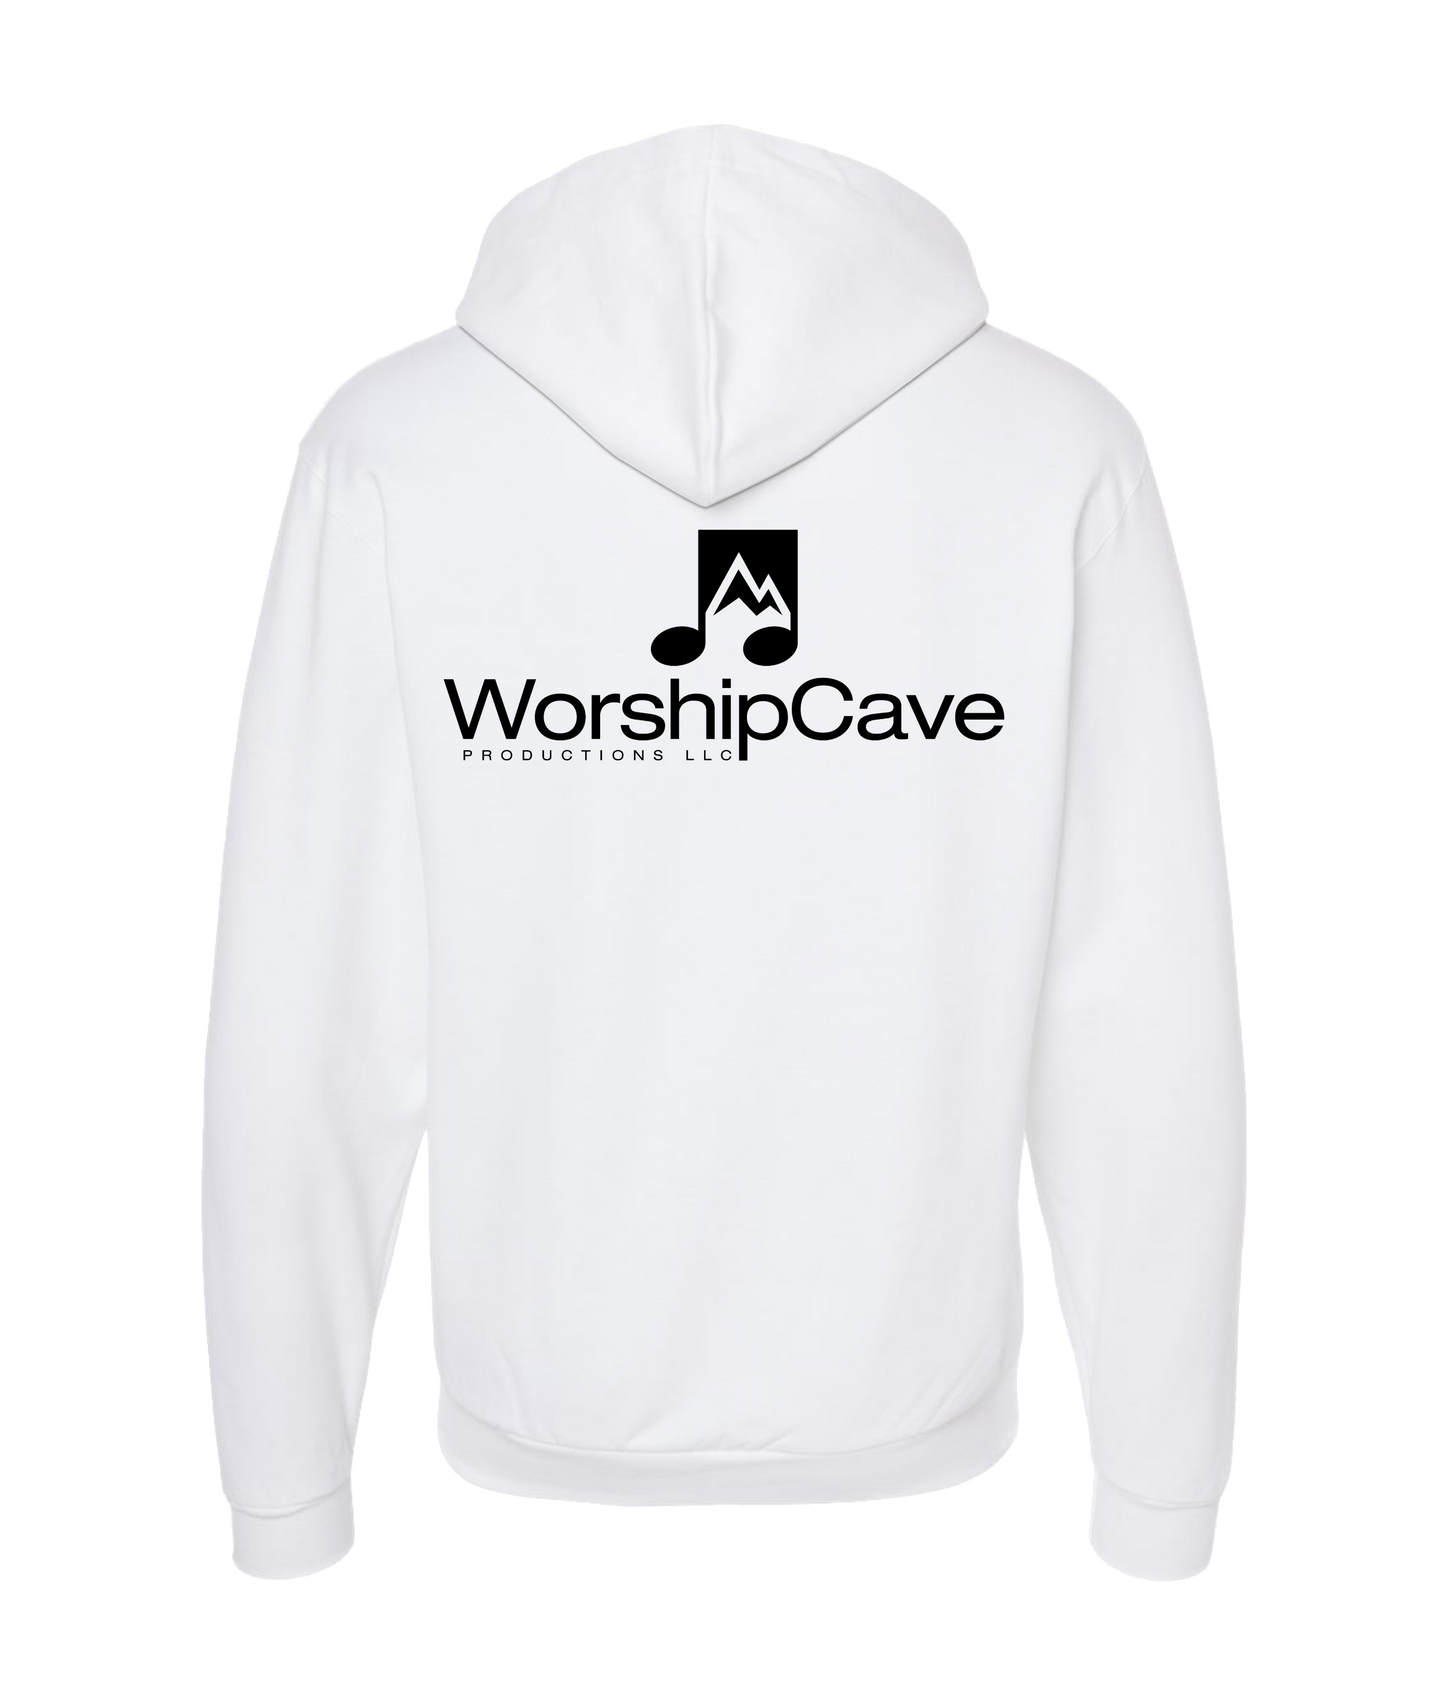 WorshipCave Productions LLC - Black Logo - White Zip Up Hoodie